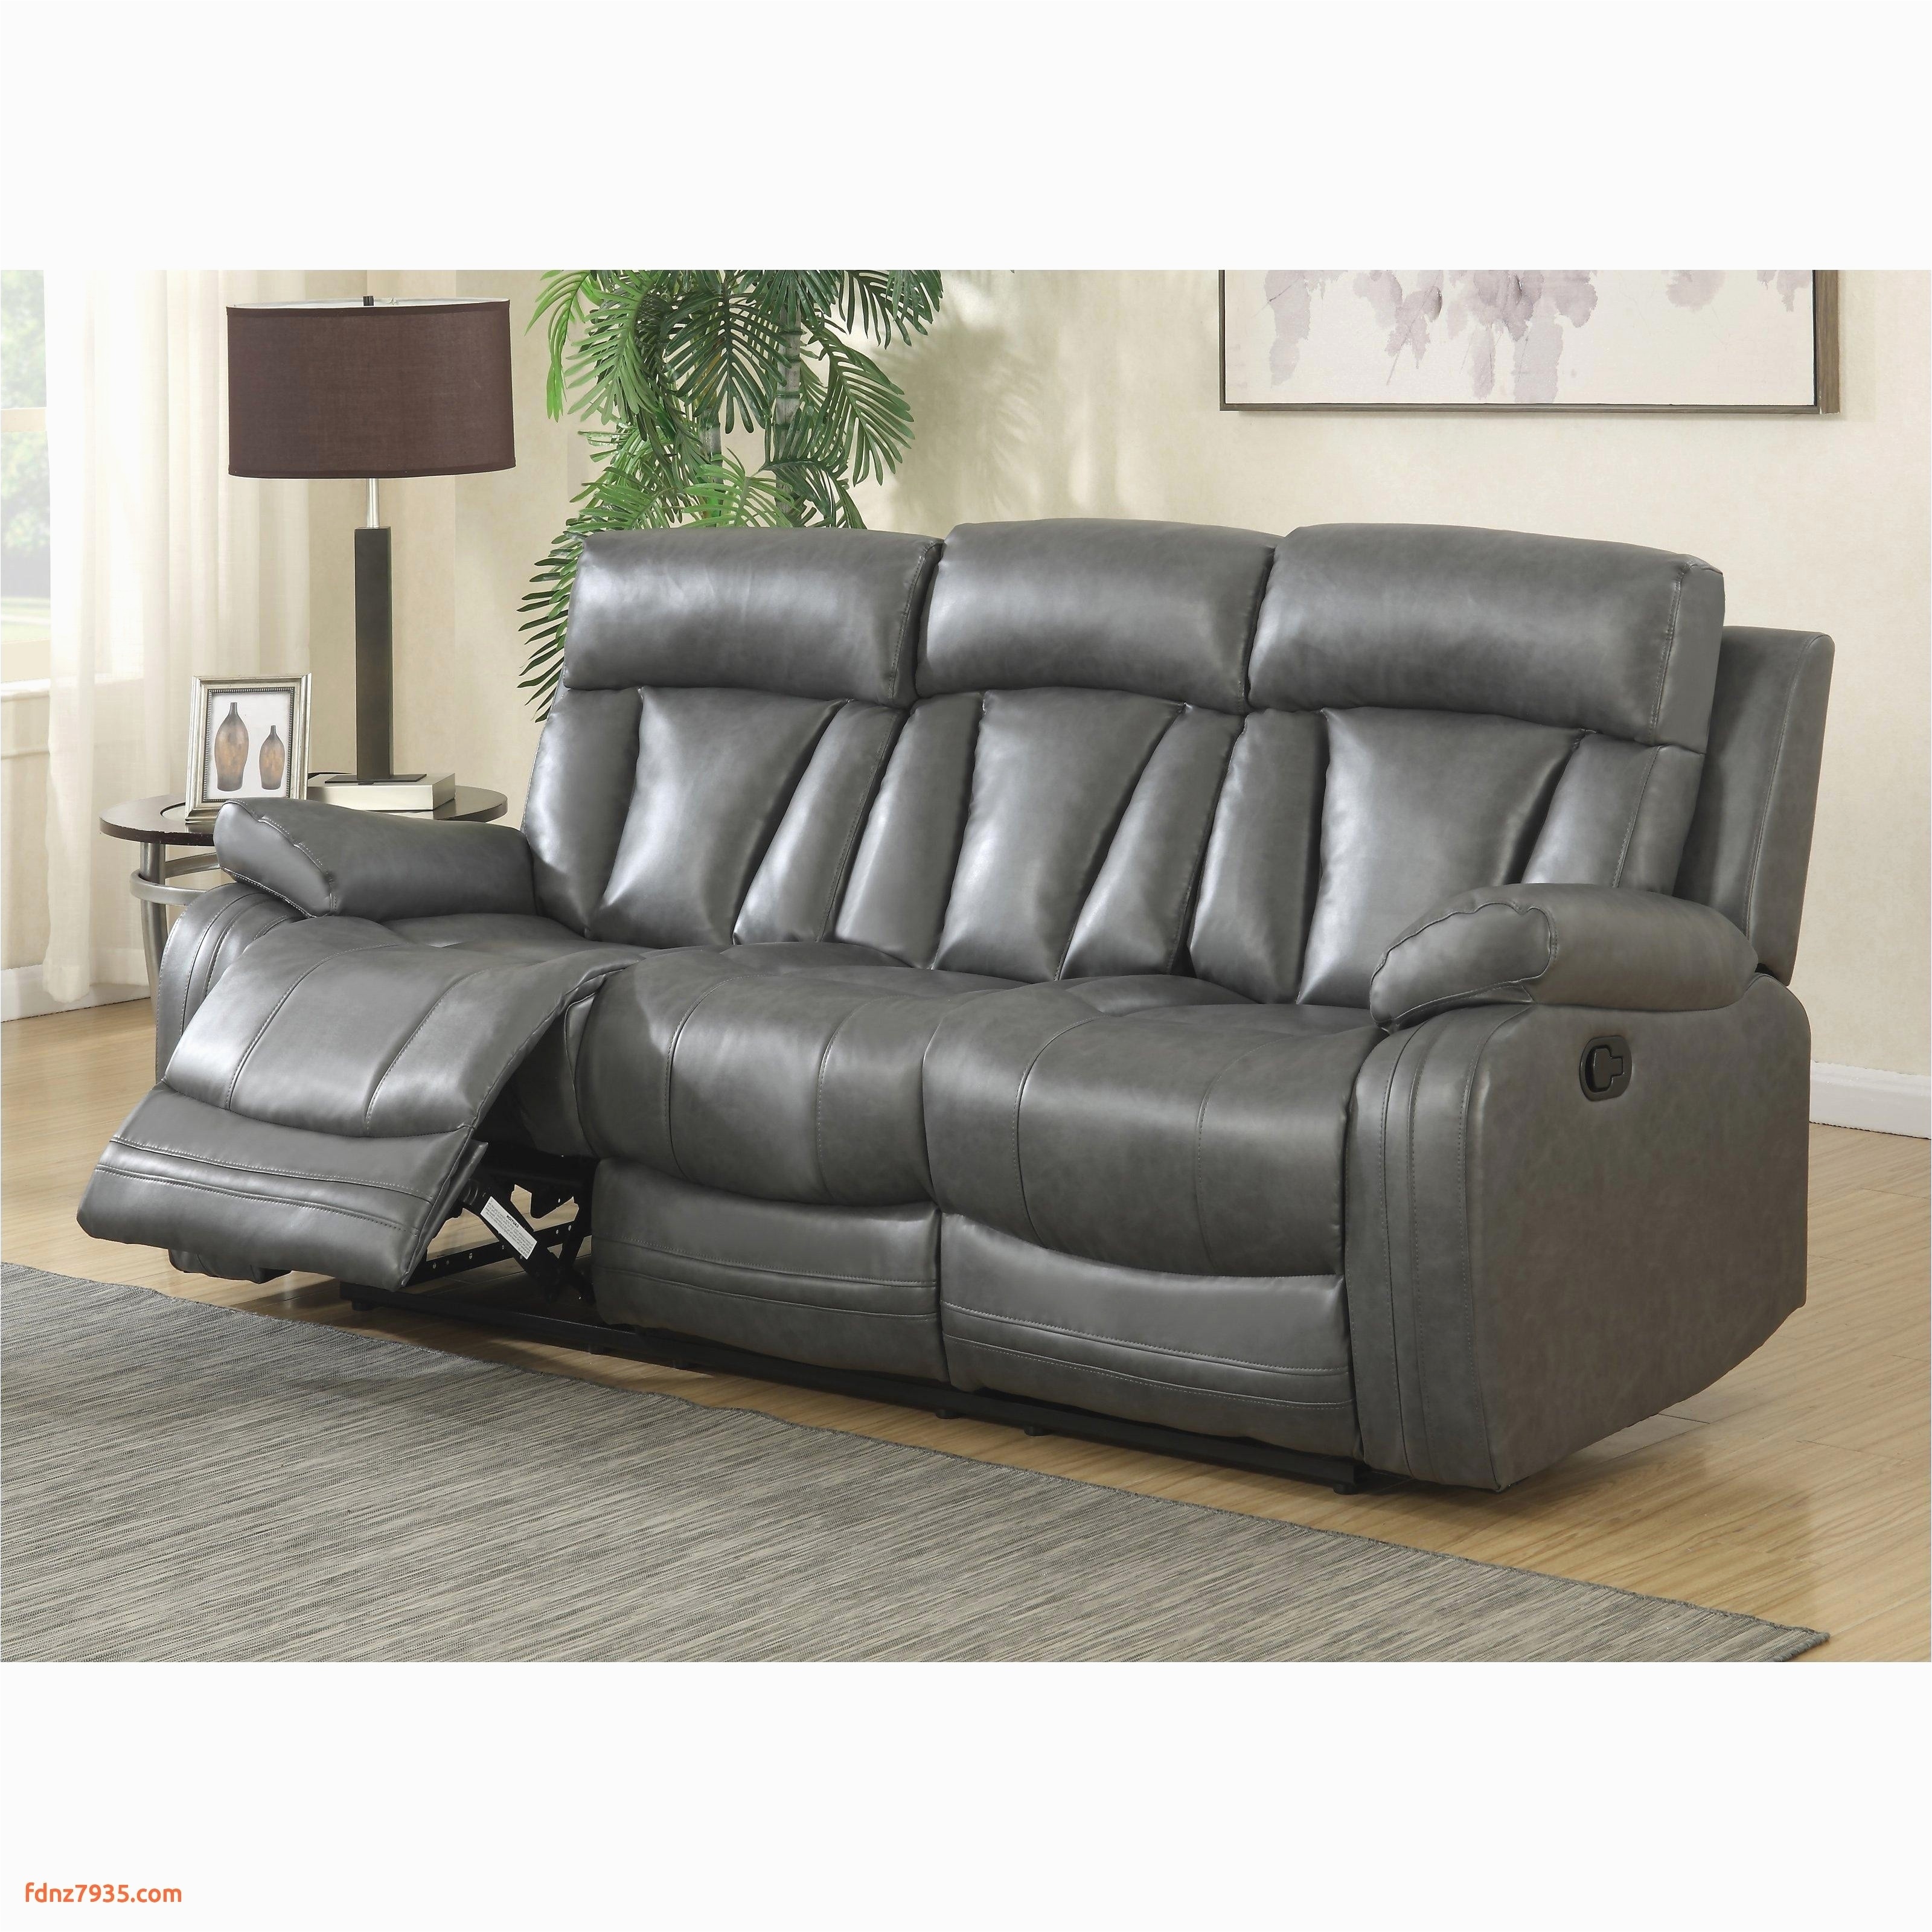 power reclining sofa and loveseat beautiful furniture gray reclining loveseat best tufted loveseat 0d bob furniture